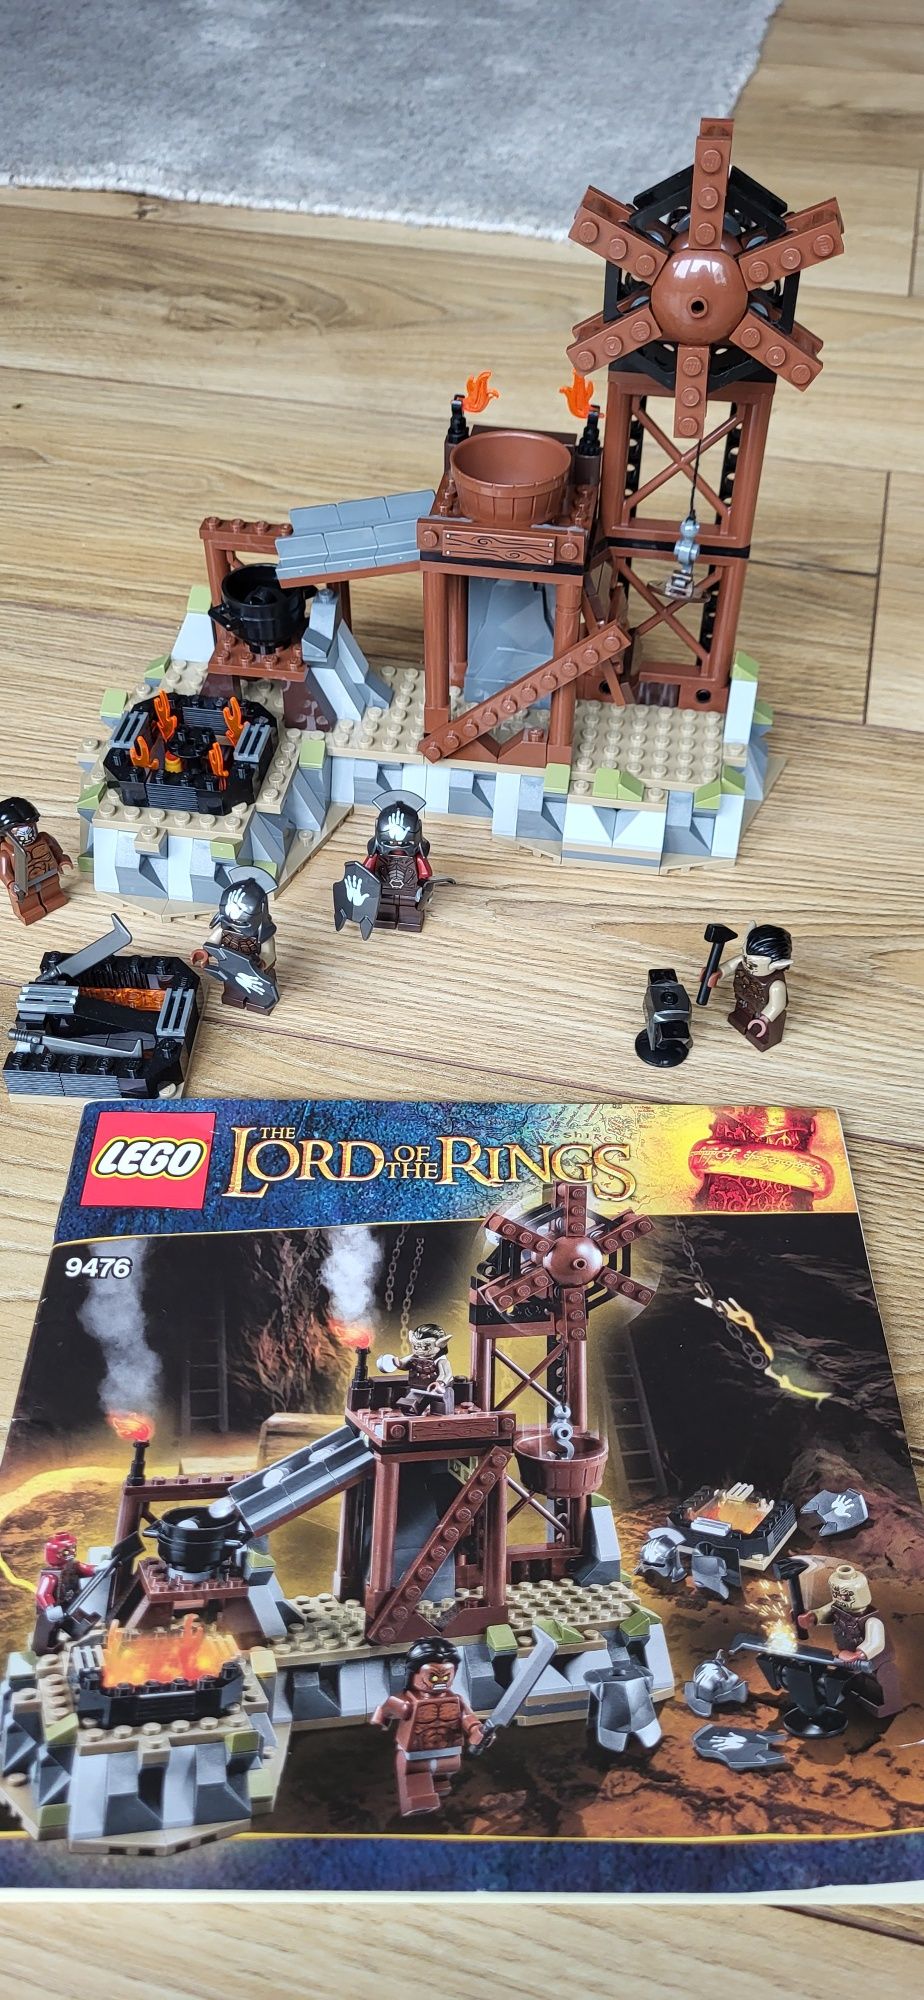 Lego 9476 Lord of the Rings kuźnia orków.